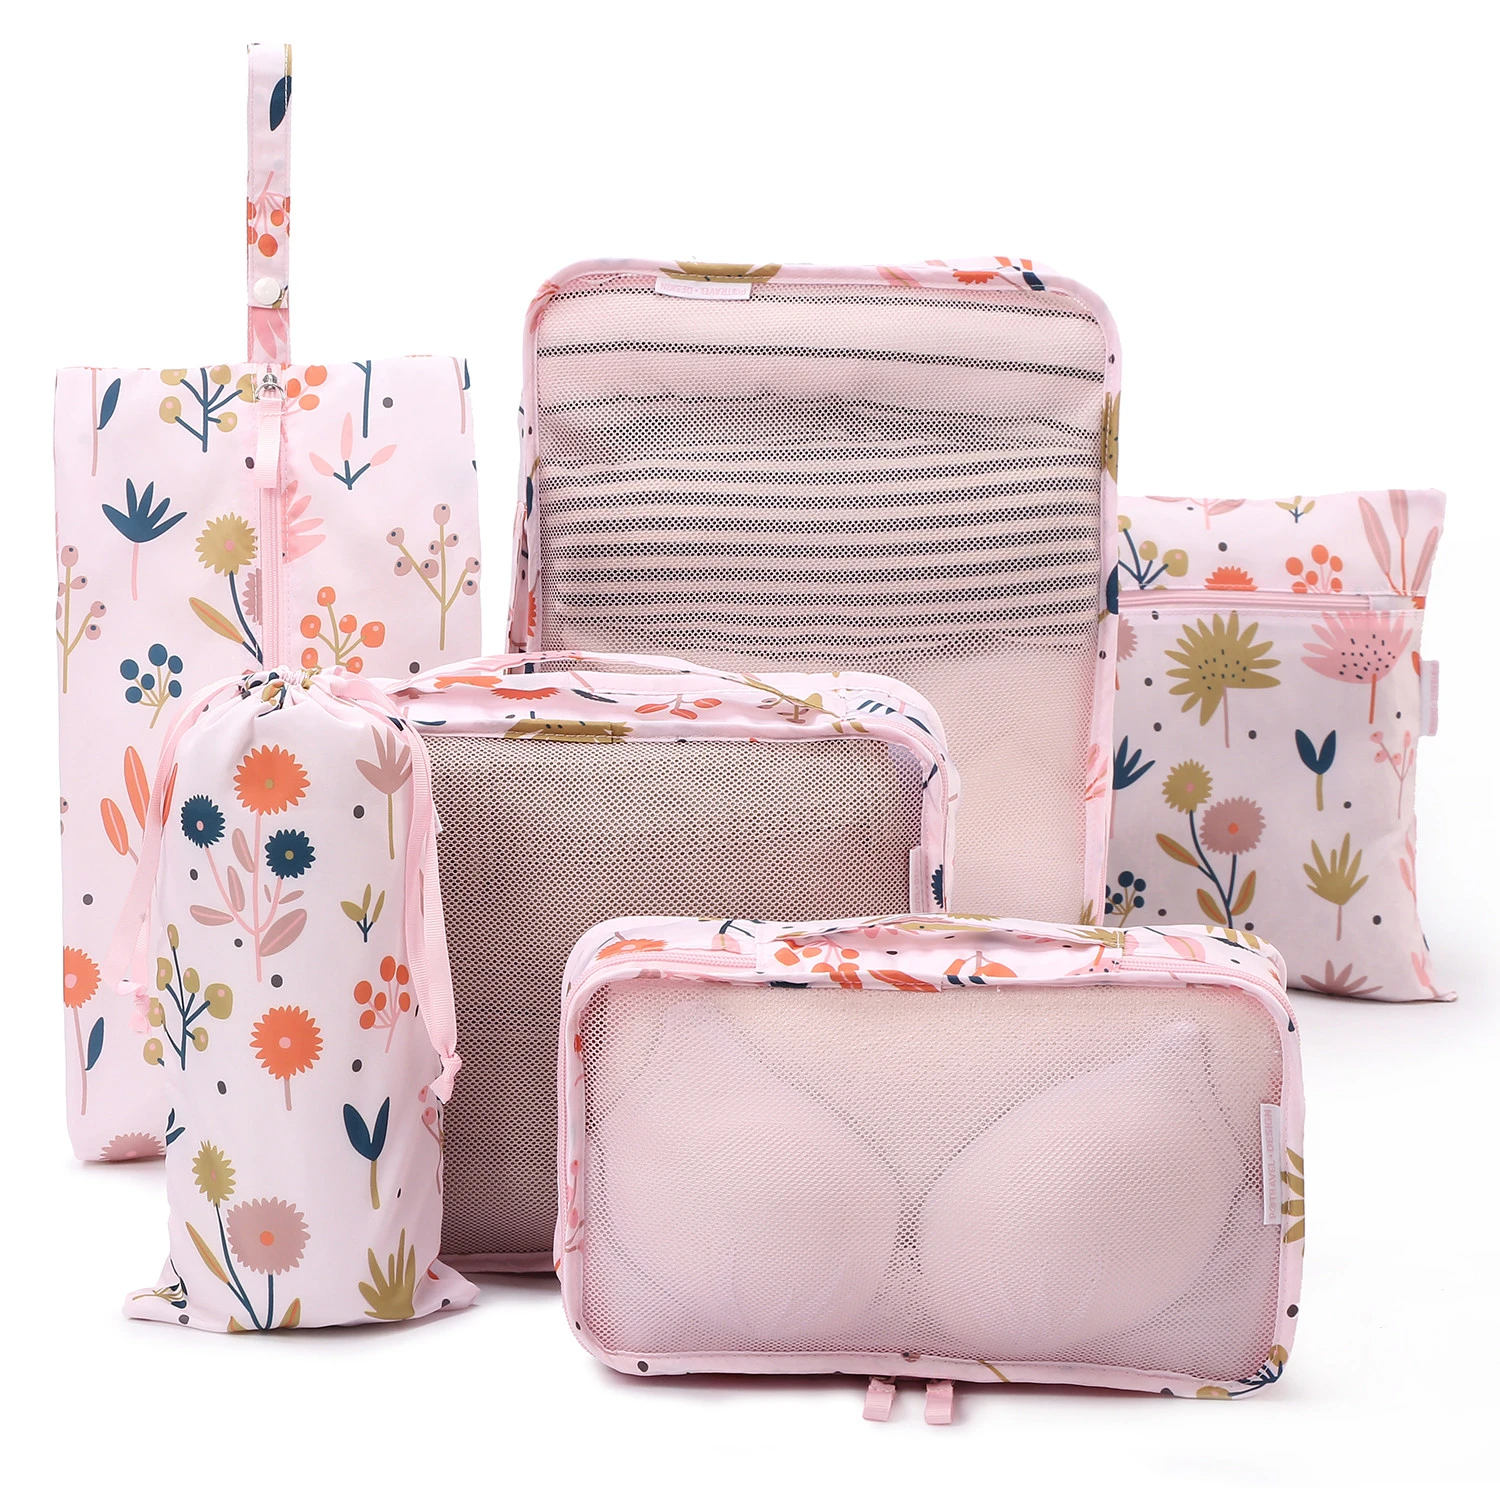 Wholesale high quality P.travel Travel Luggage bag Organizer 6 Pcs Packing Cubes Storage bag